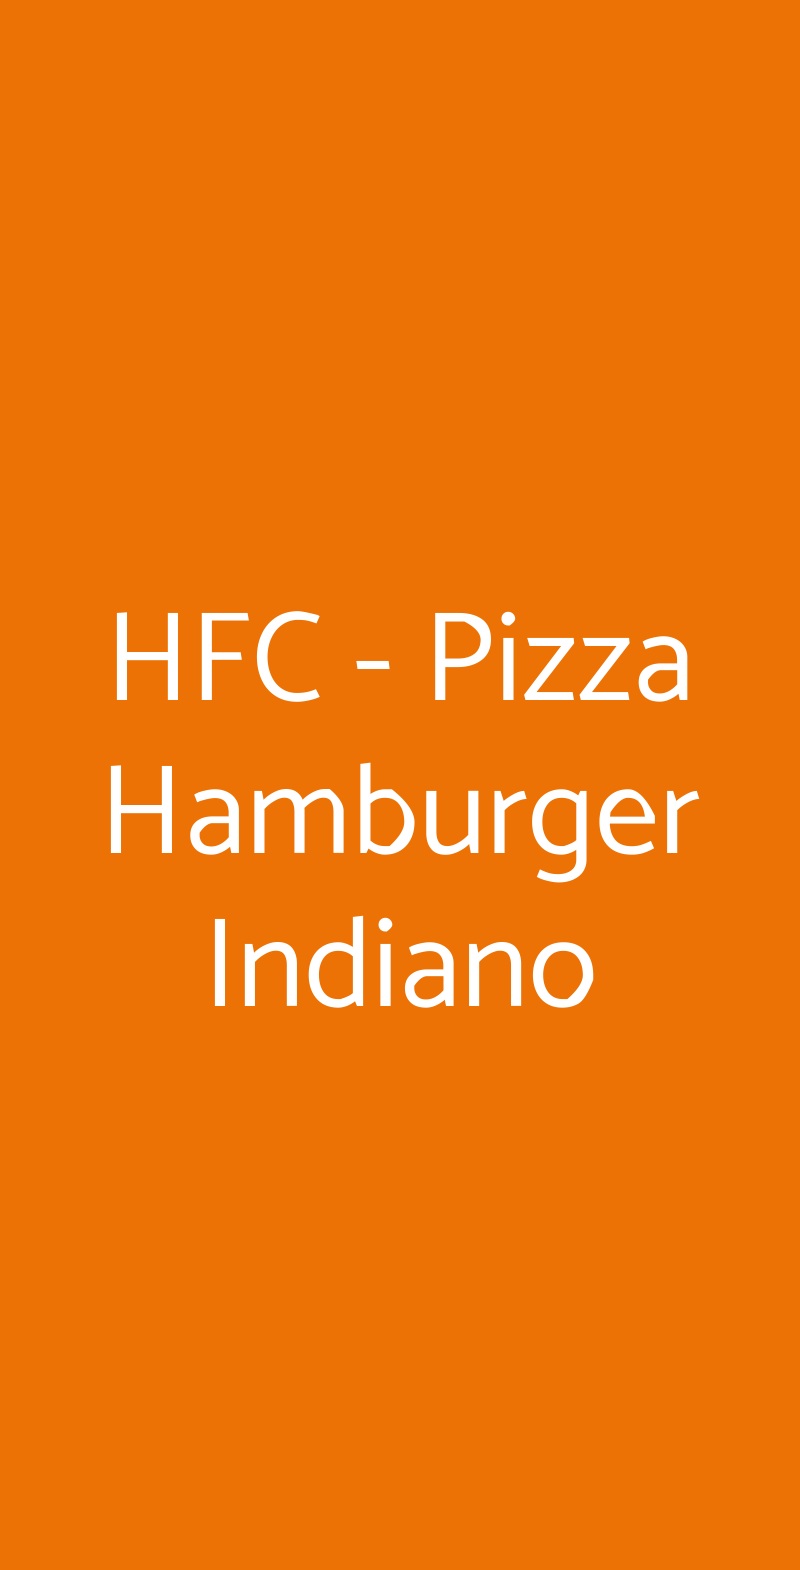 HFC - Pizza Hamburger Indiano Bologna menù 1 pagina